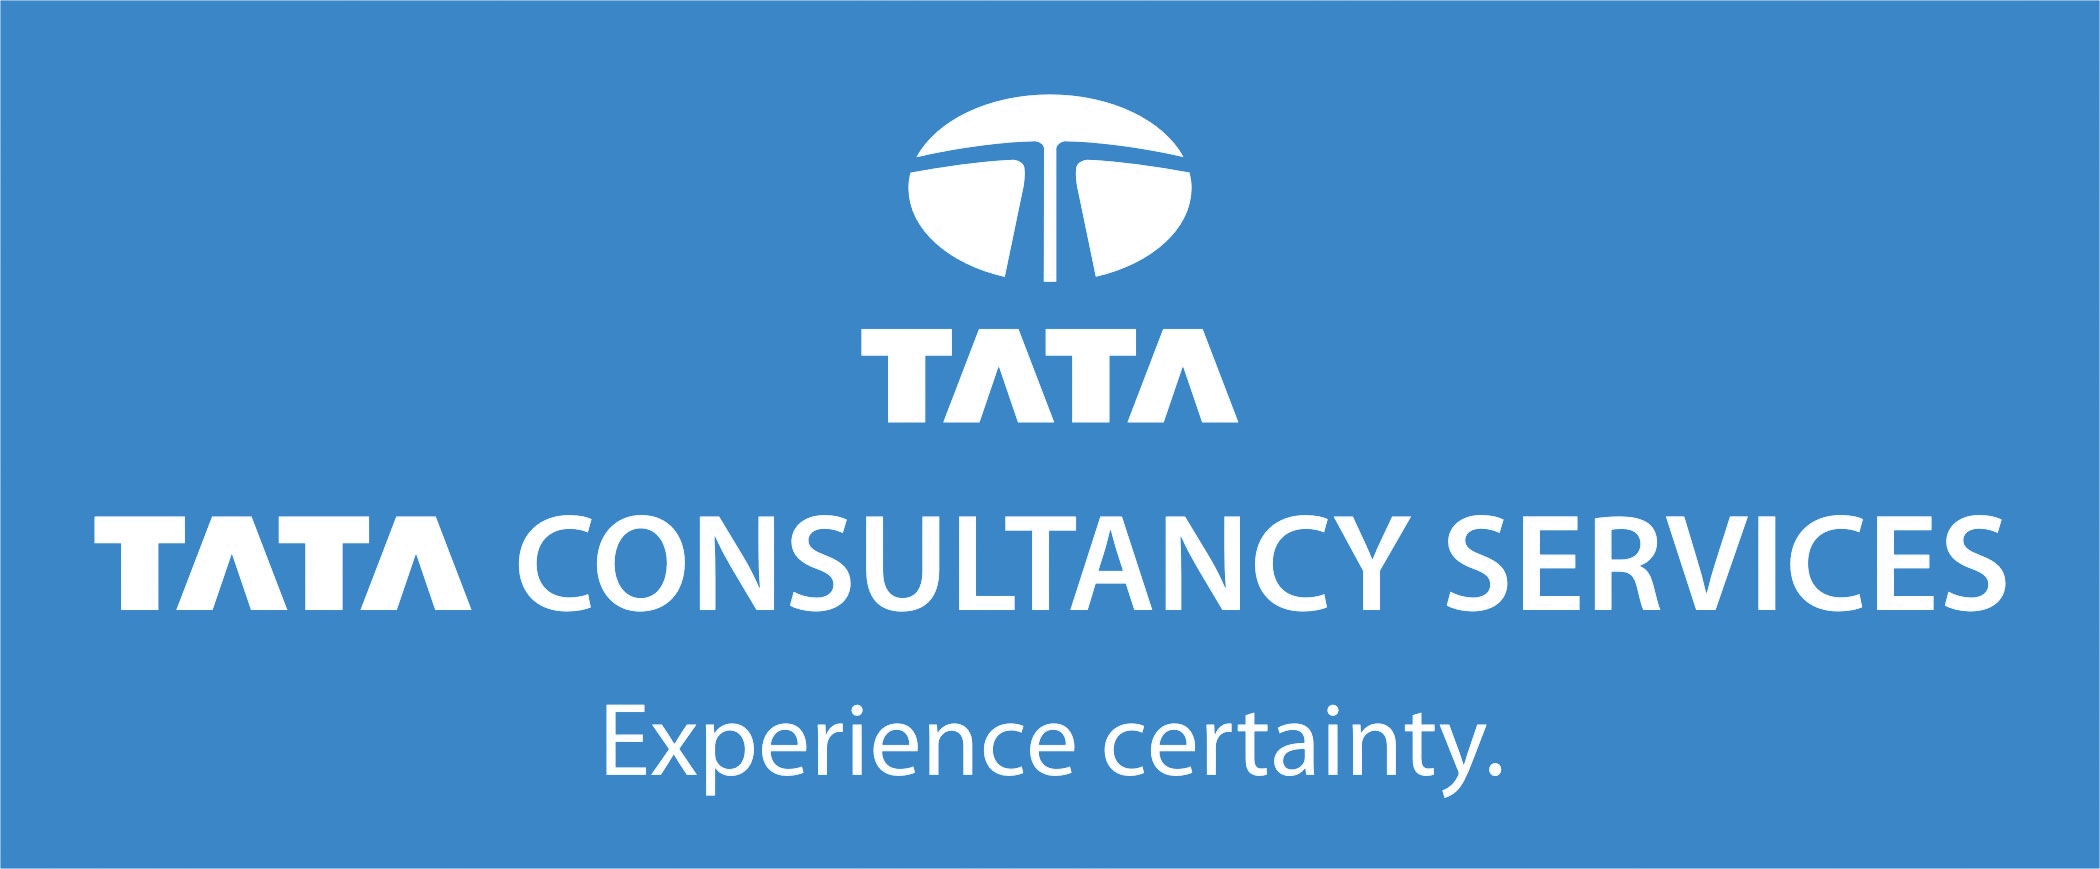 TATA CONSULTANCY SERVICES